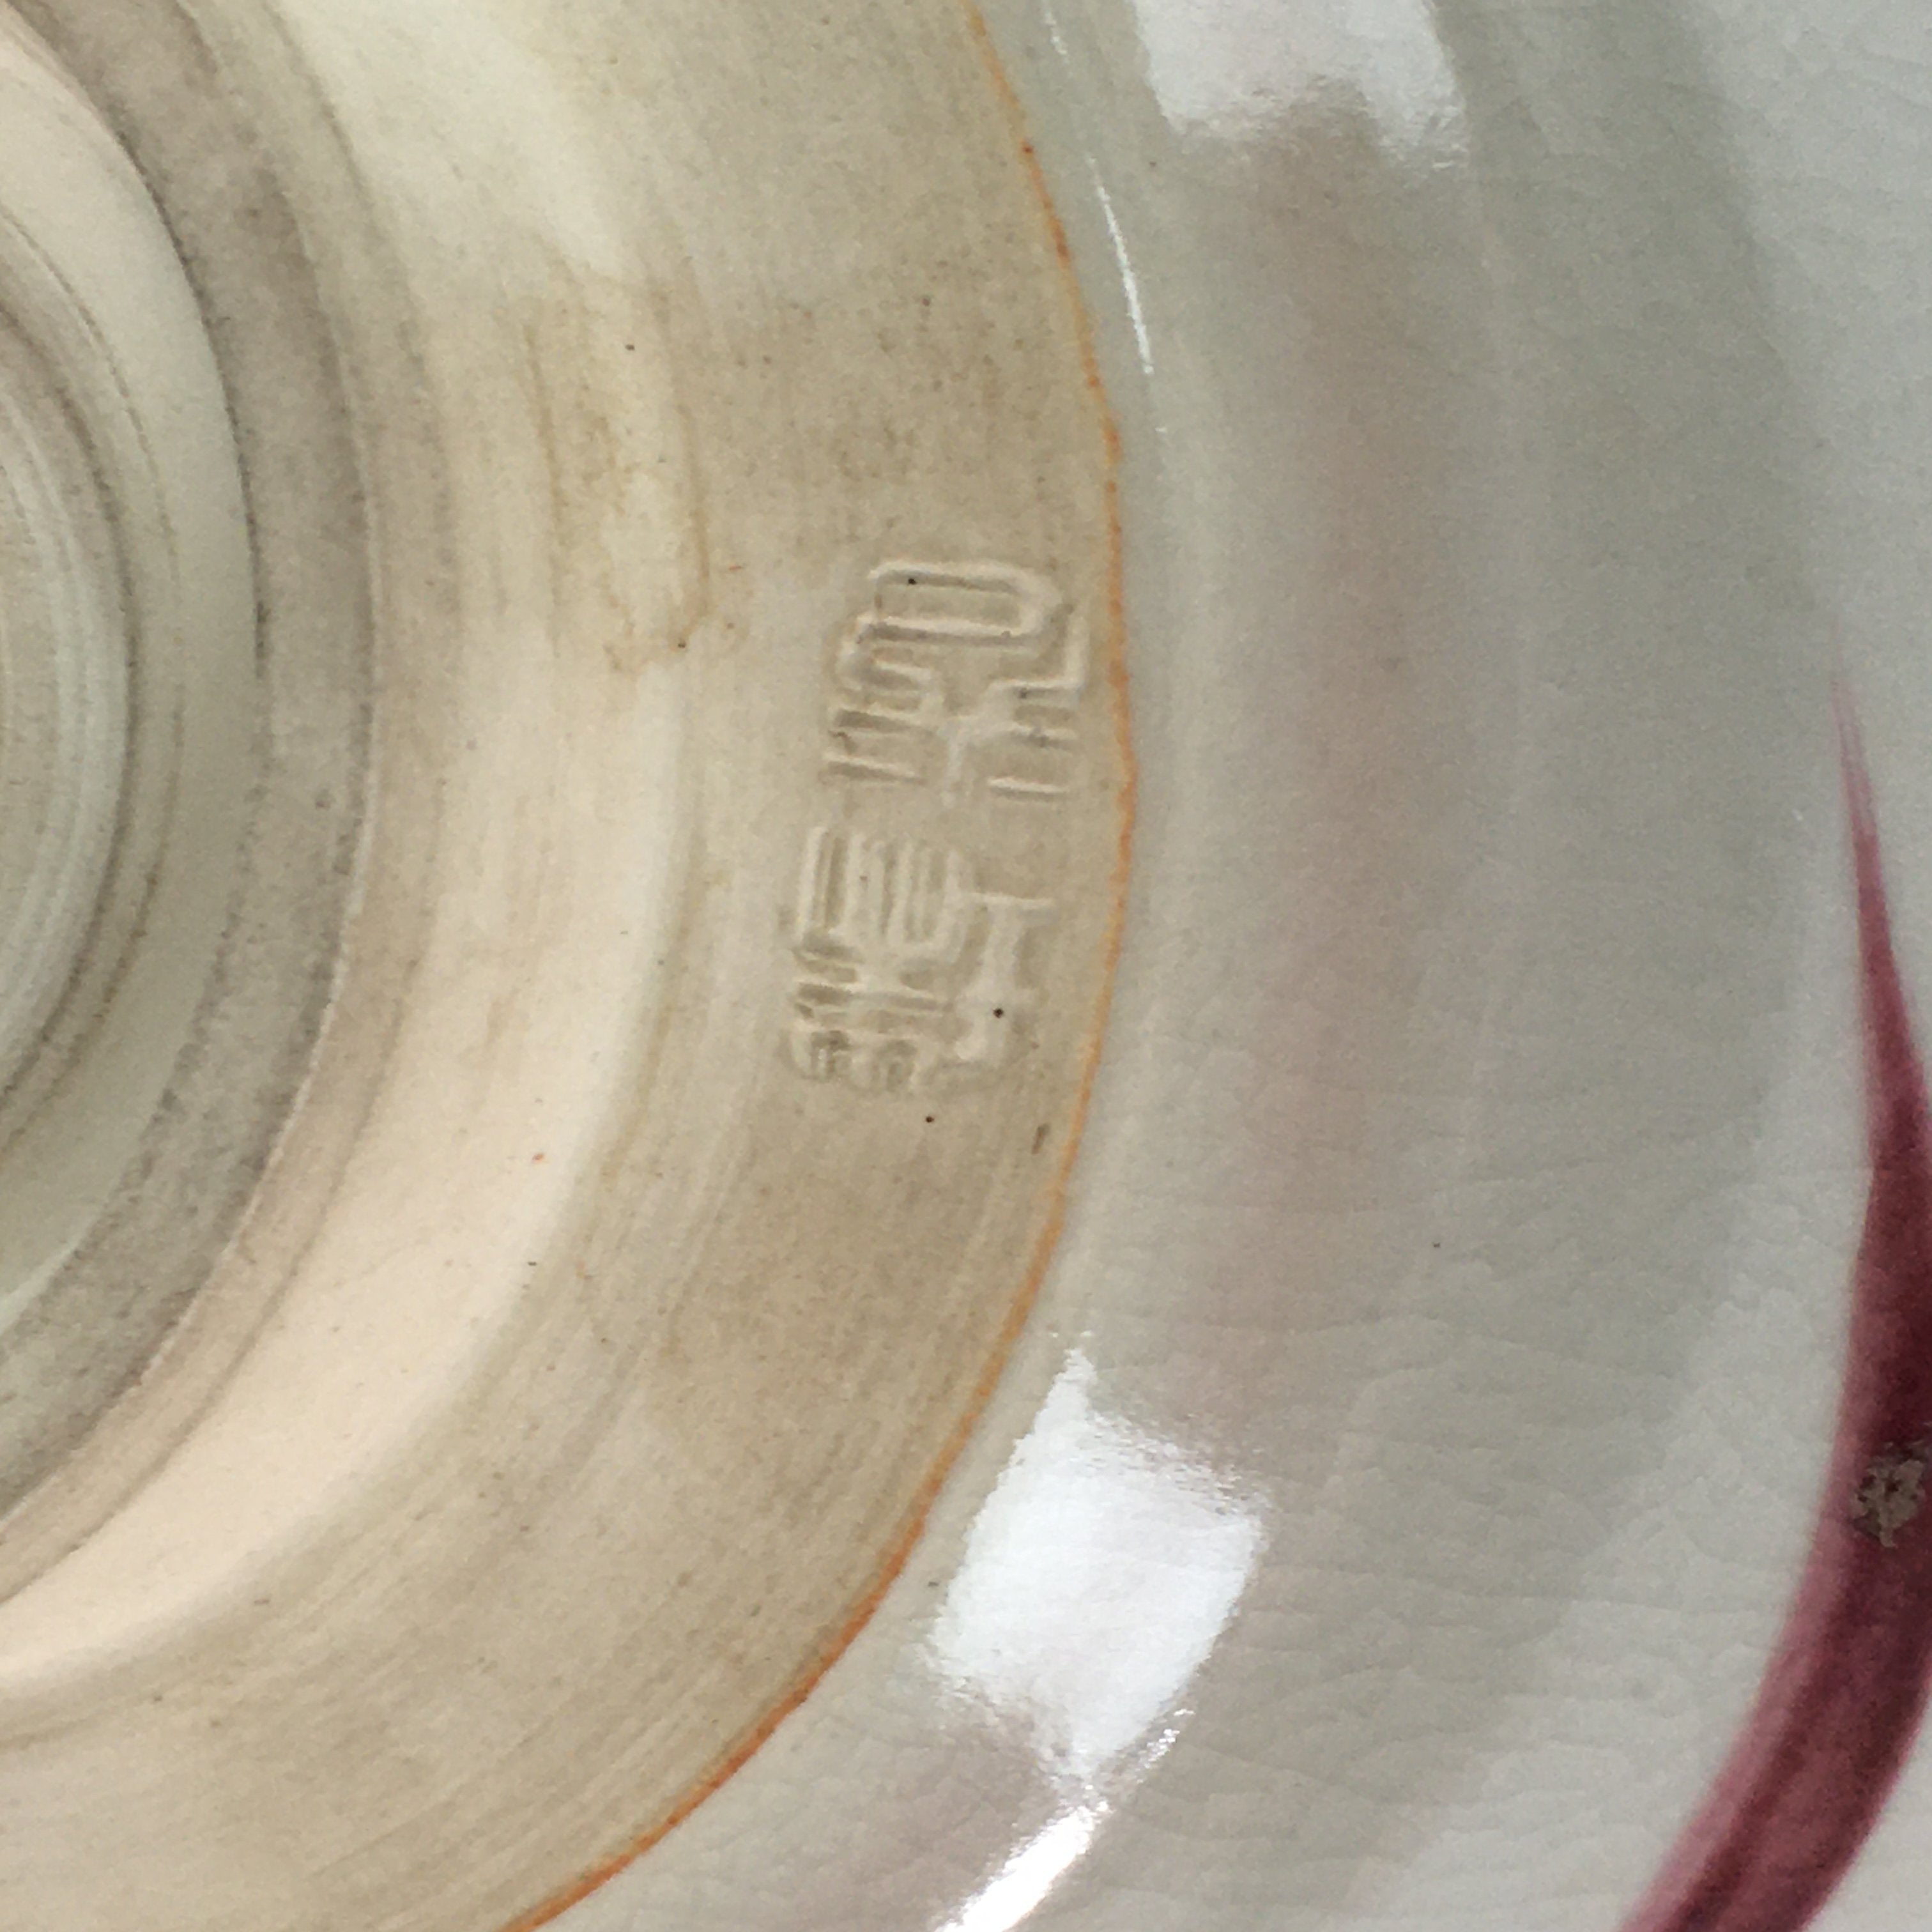 Japanese Ceramic Tea Ceremony Bowl Chawan Vtg Pottery Kyo ware GTB719